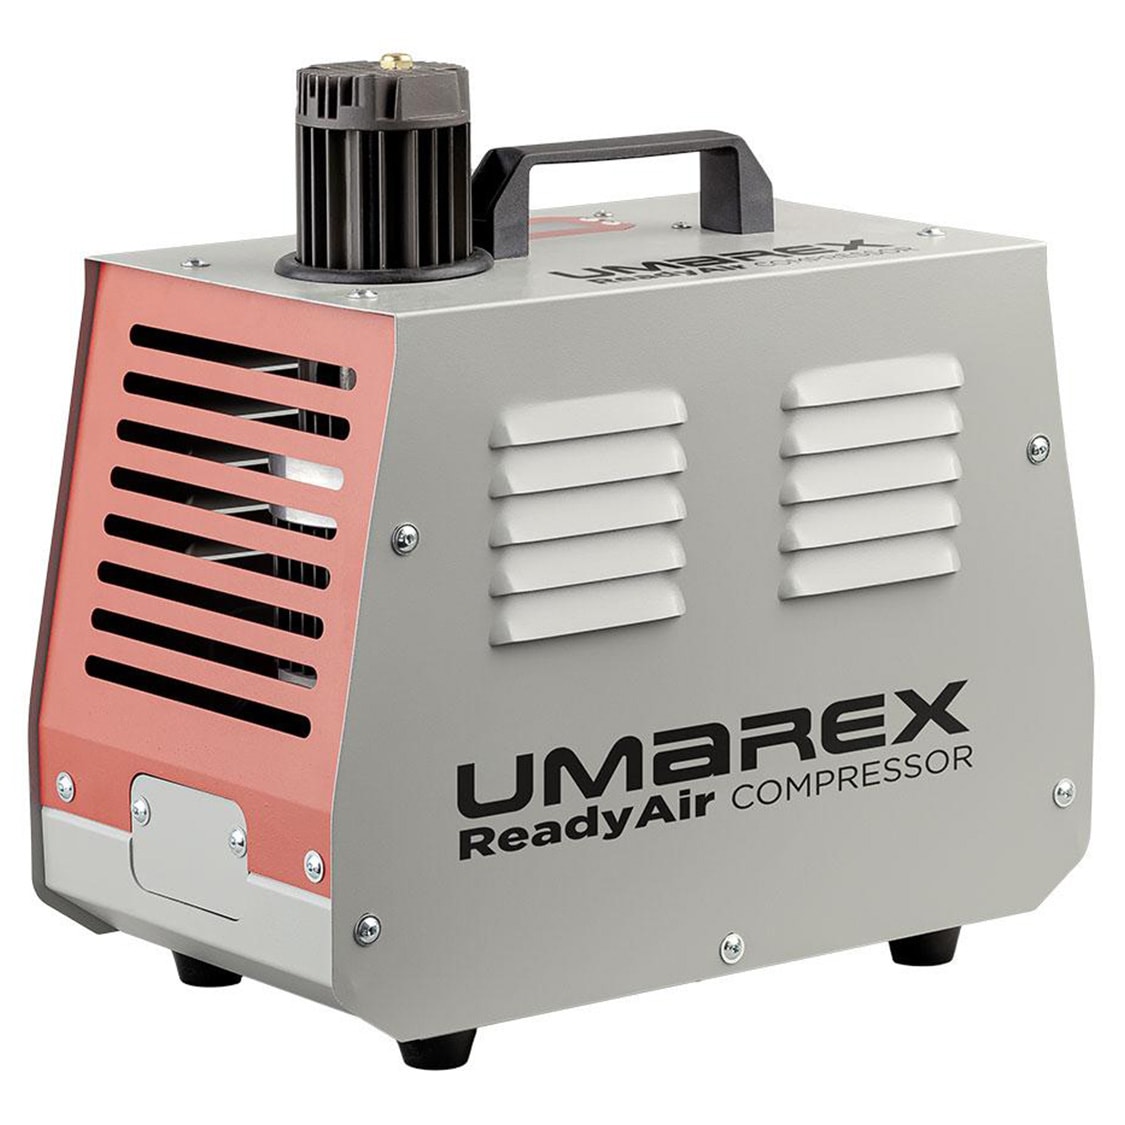 Kompresor do wiatrówek PCP Umarex ReadyAir - 300 Bar